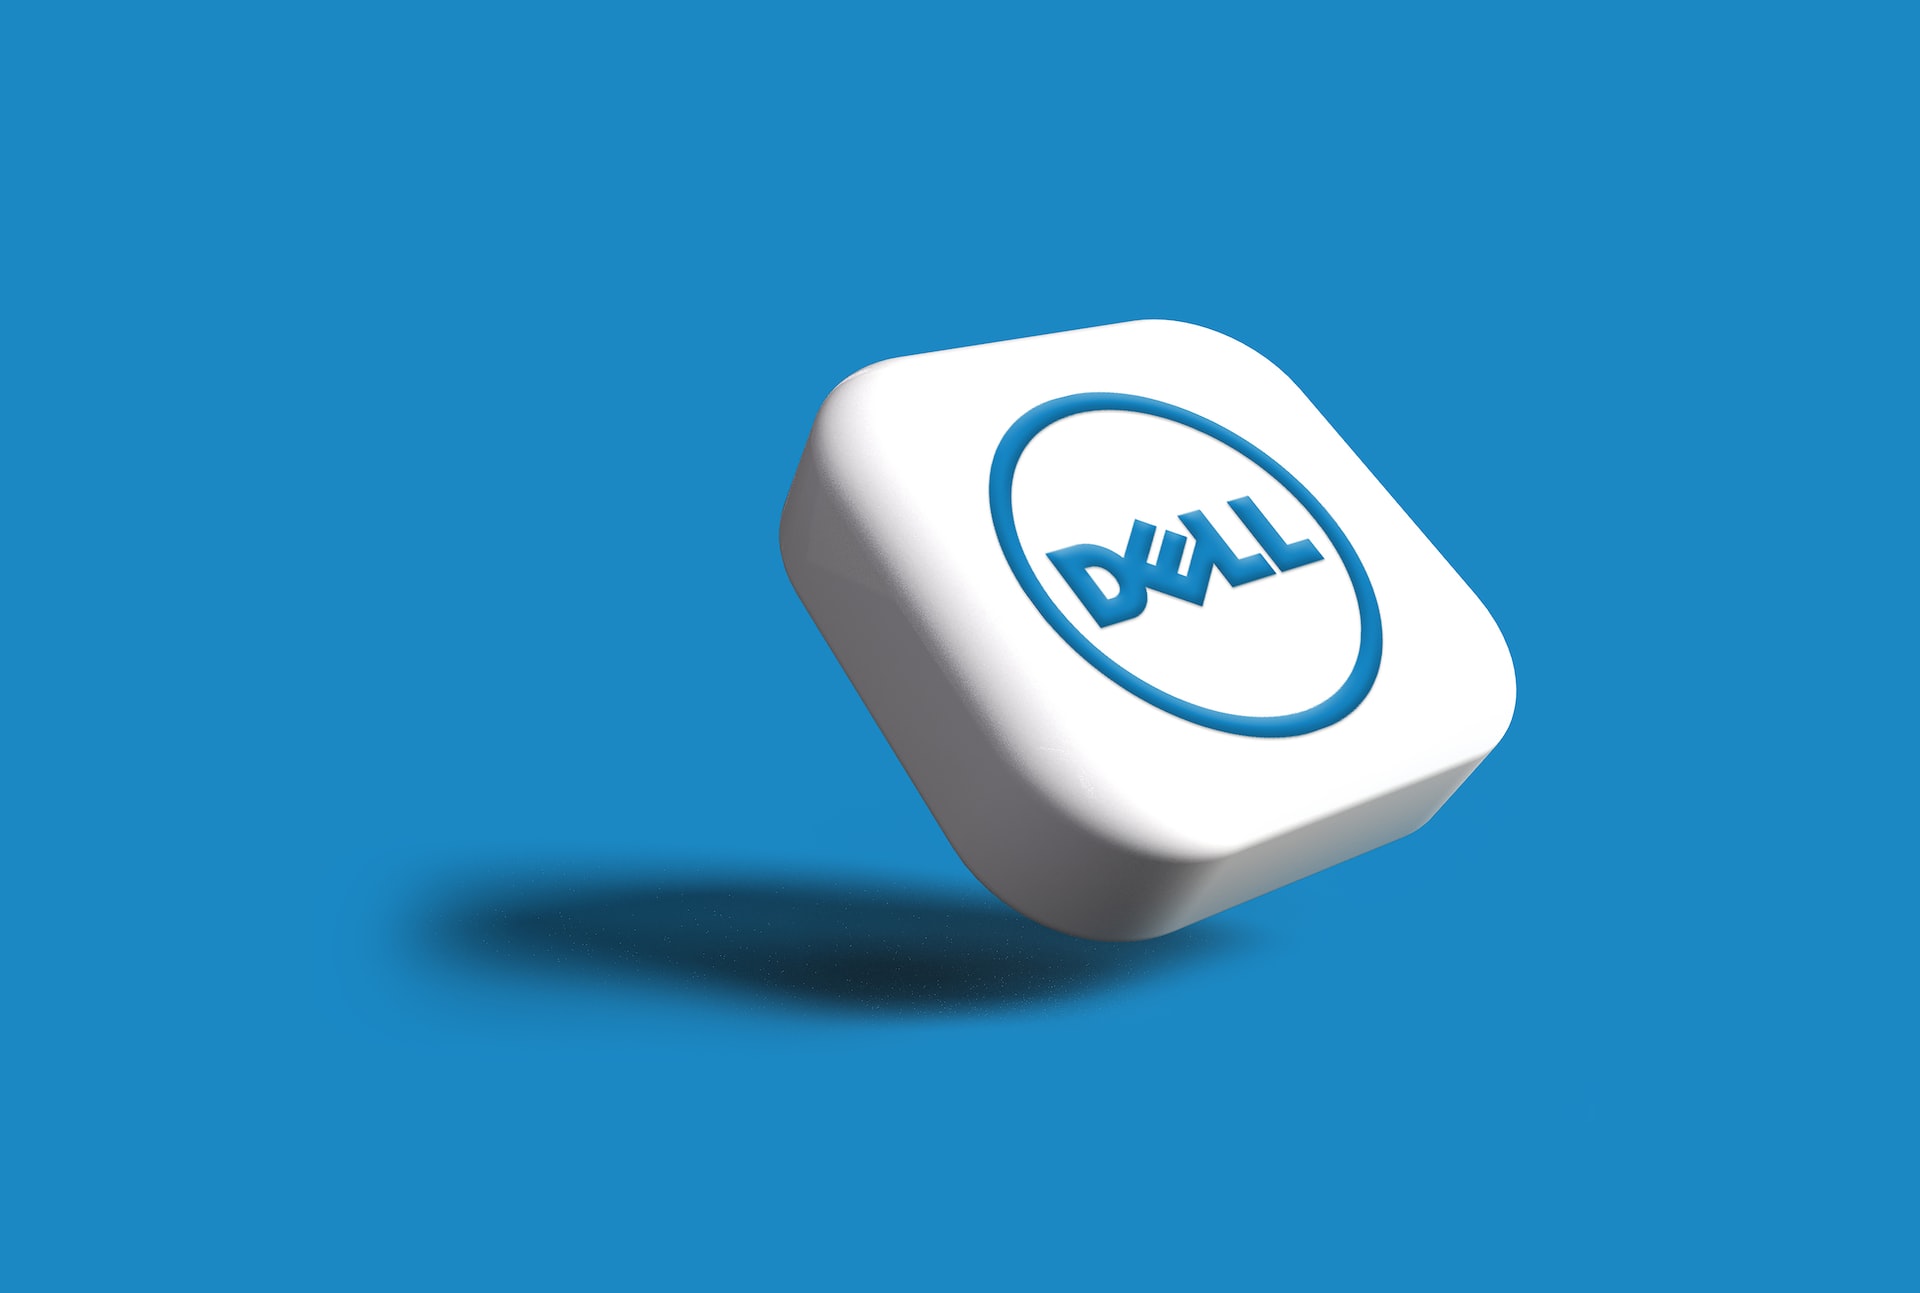 Dell Technologies stock, DELL stock